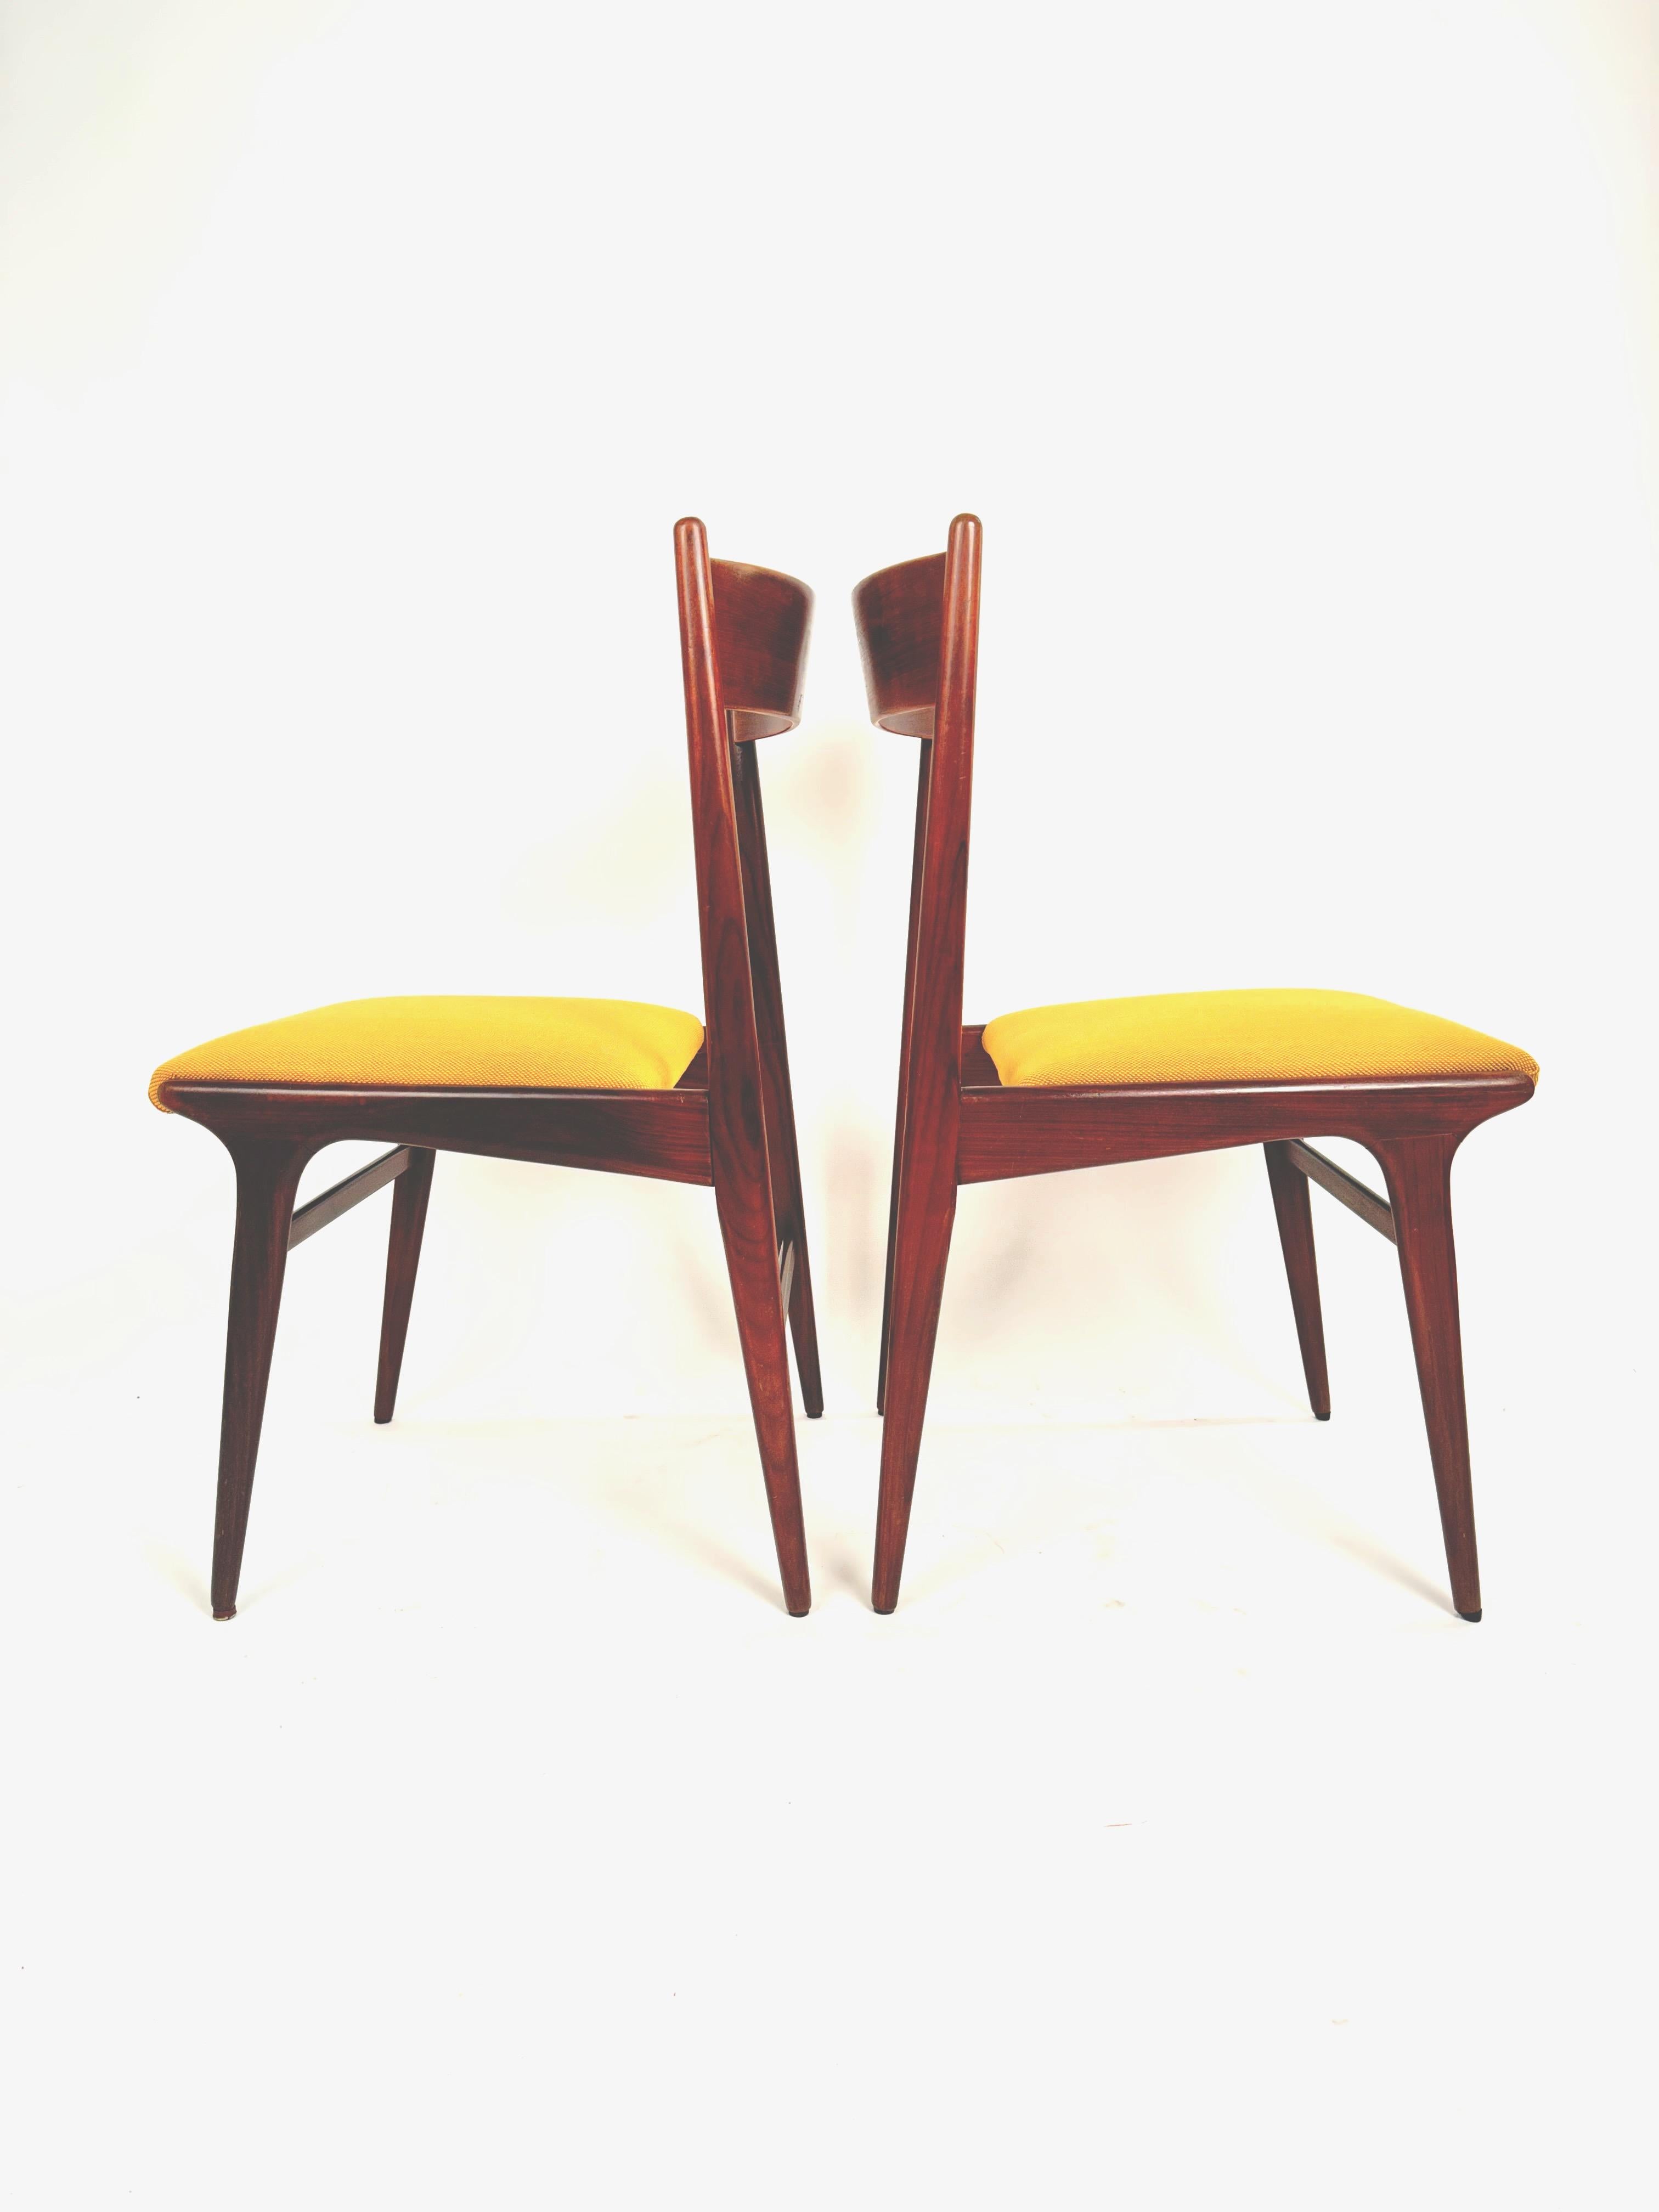 Carlo de Carli MidSet of Four Teak Dining Chairs in Kvadrat Yello Fabric, 1960s For Sale 1